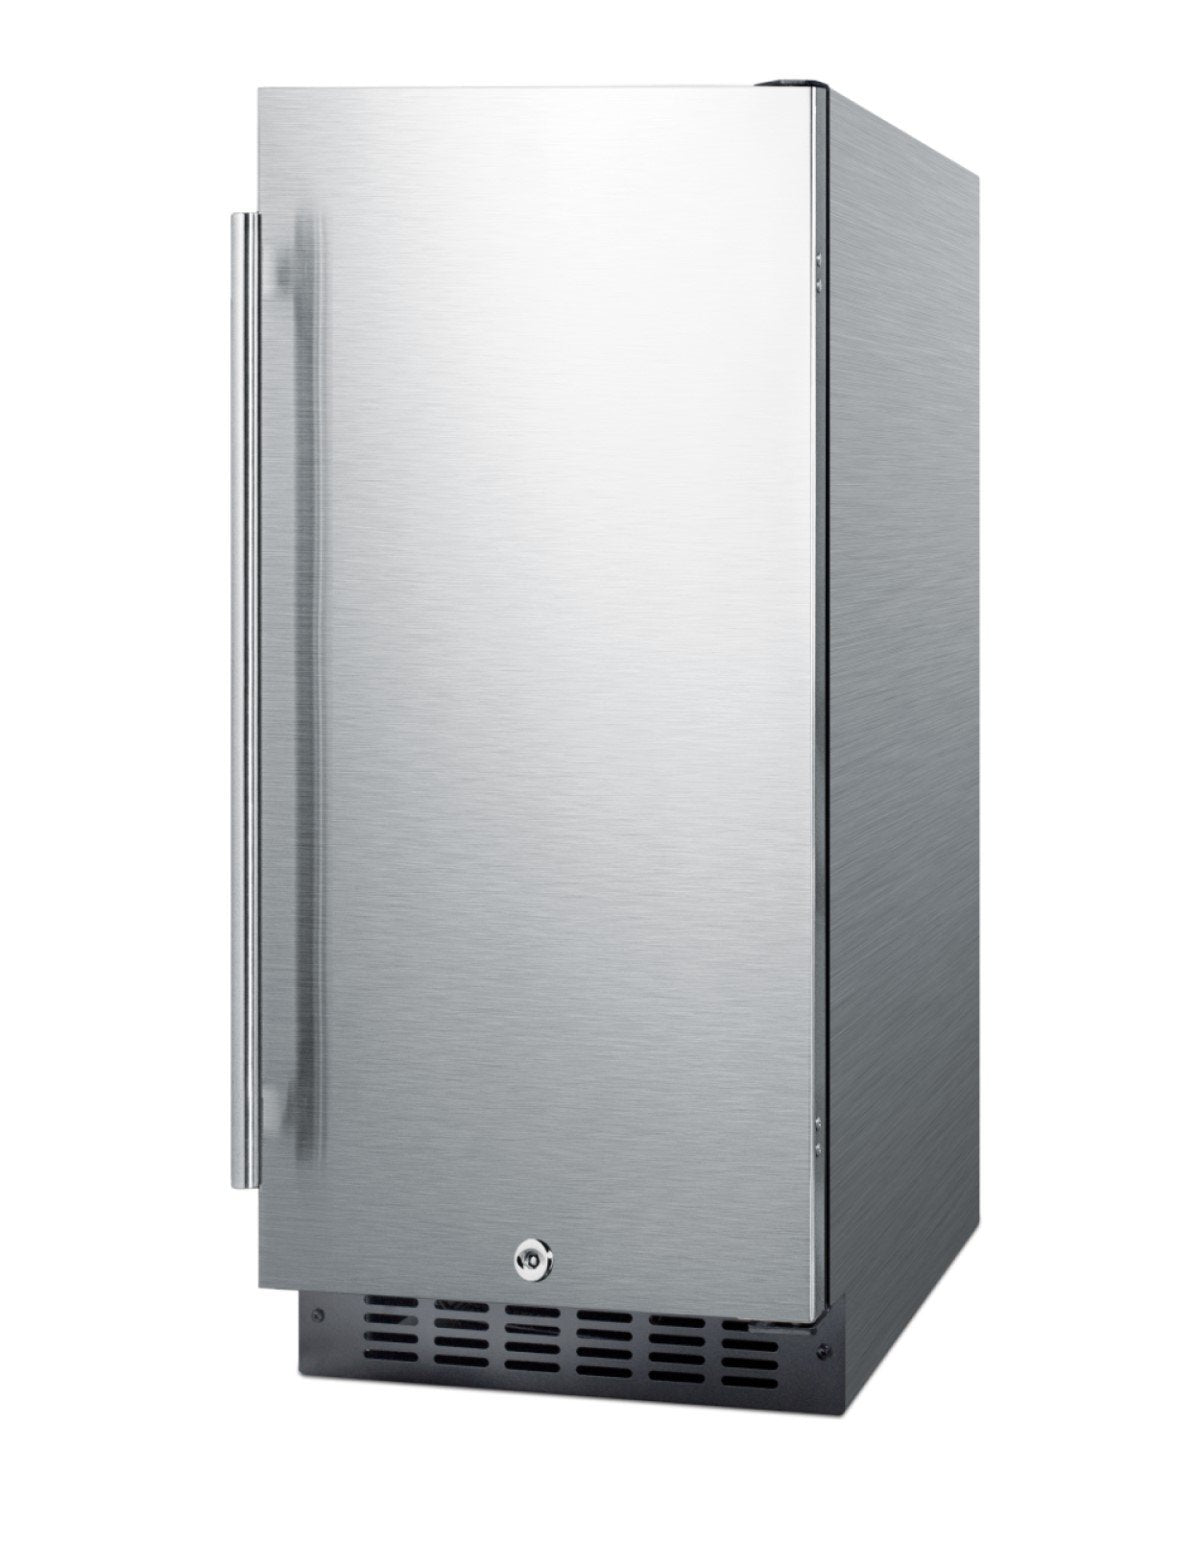 SUMMIT 15" Wide Built-In All-Refrigerator (FF1532B)